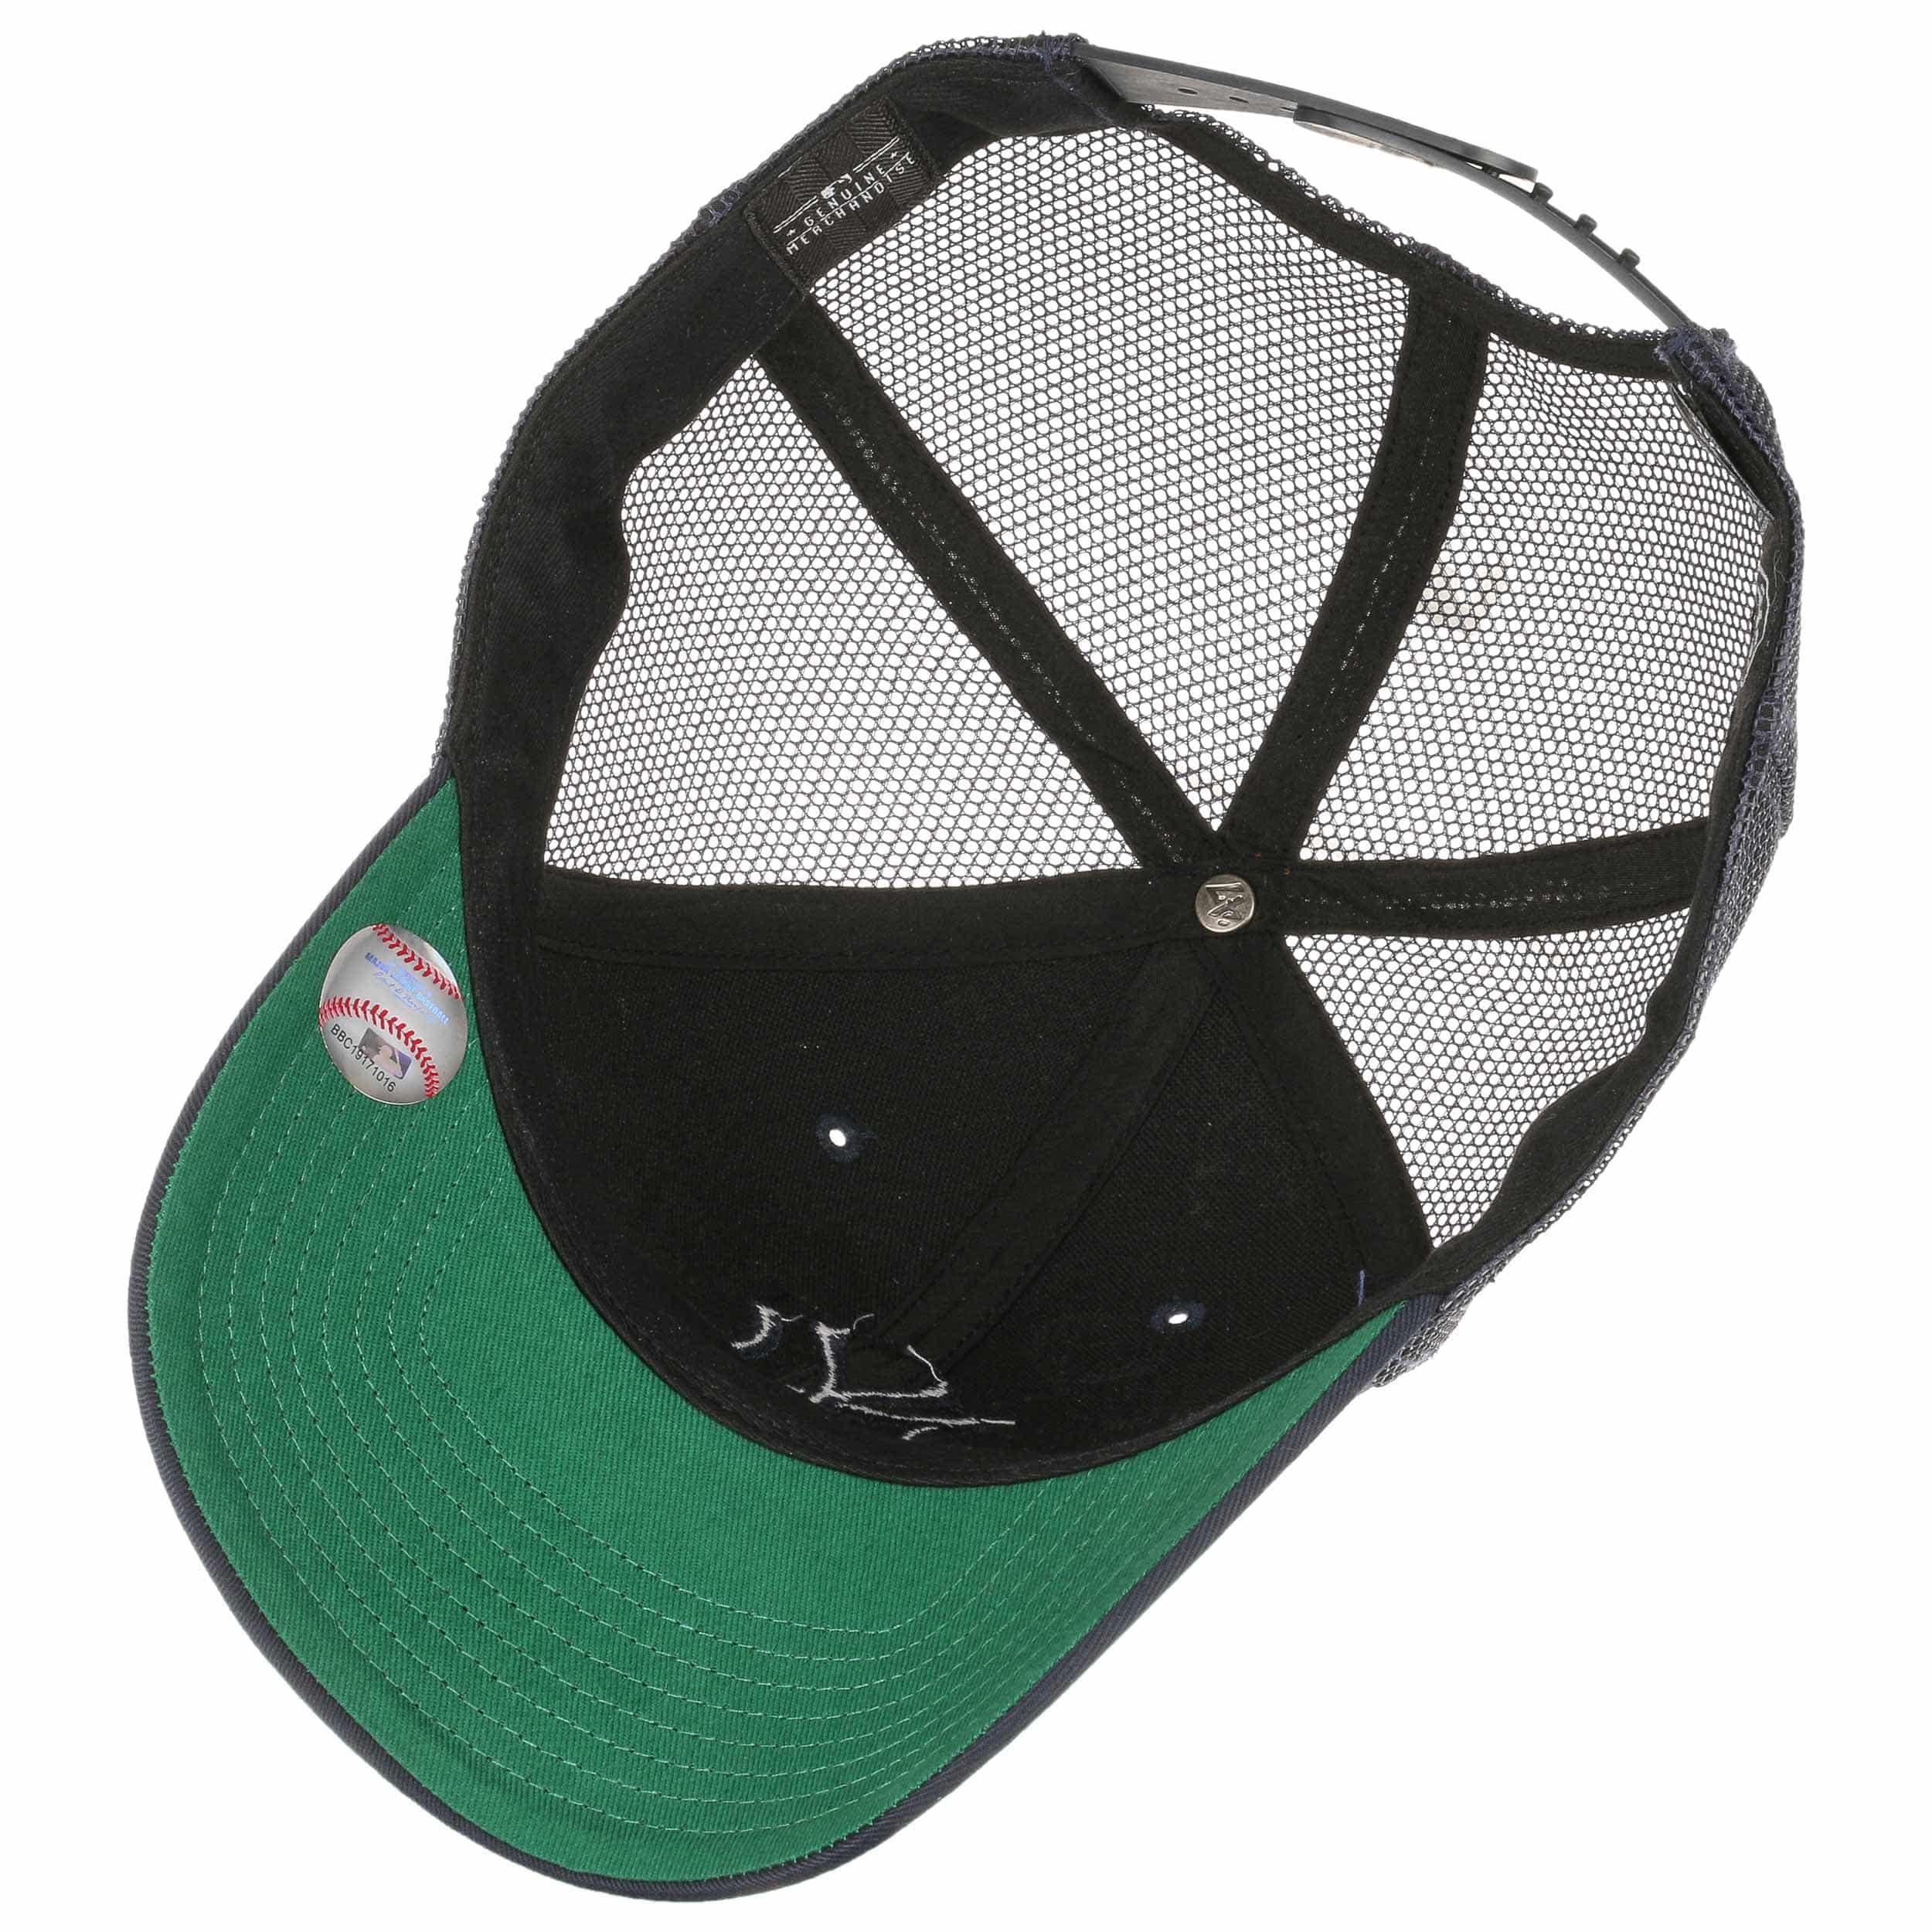 47 Brand | 47 Brand Hat | 47 Brand Custom | 47 Brand MVP Hat (Black) | 47brand Hat | 47 Hat 3D Embroidery | 47 Brand Adjustable Hat